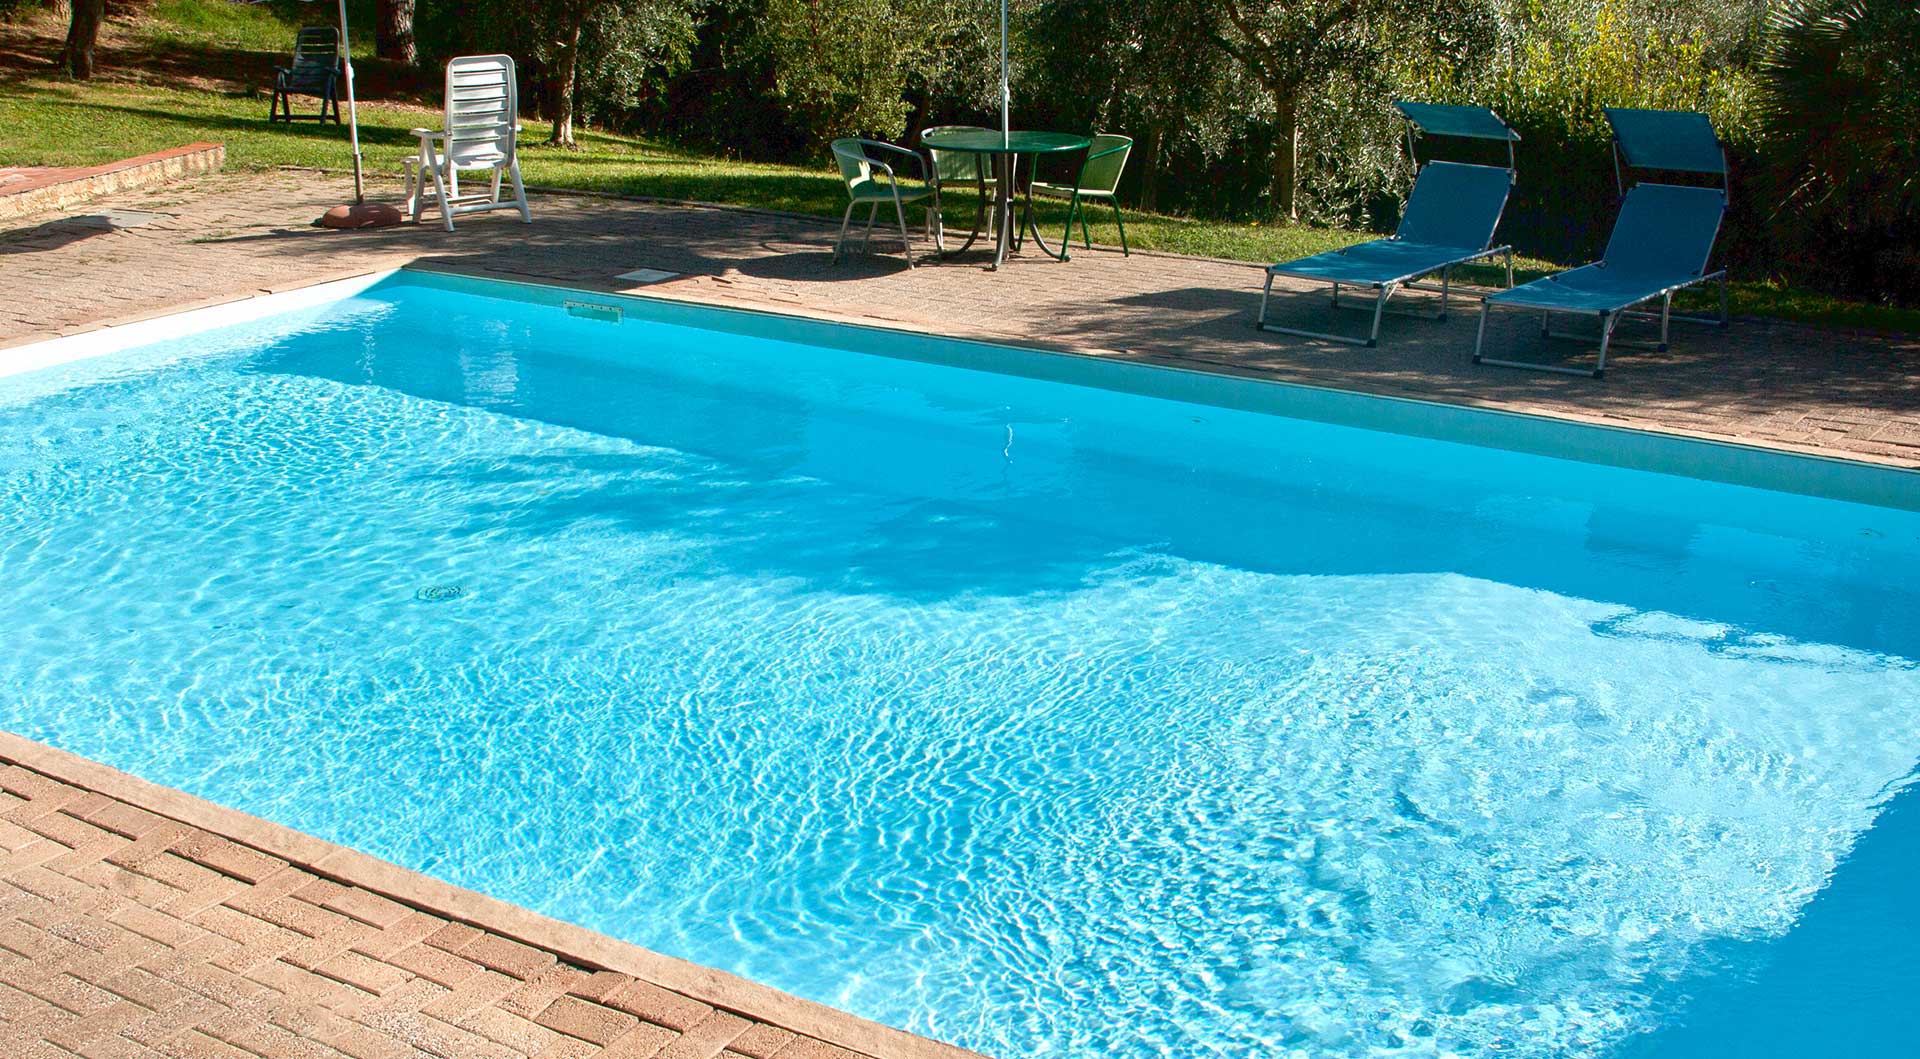 Enjoy relaxing in our salt water swimming pool